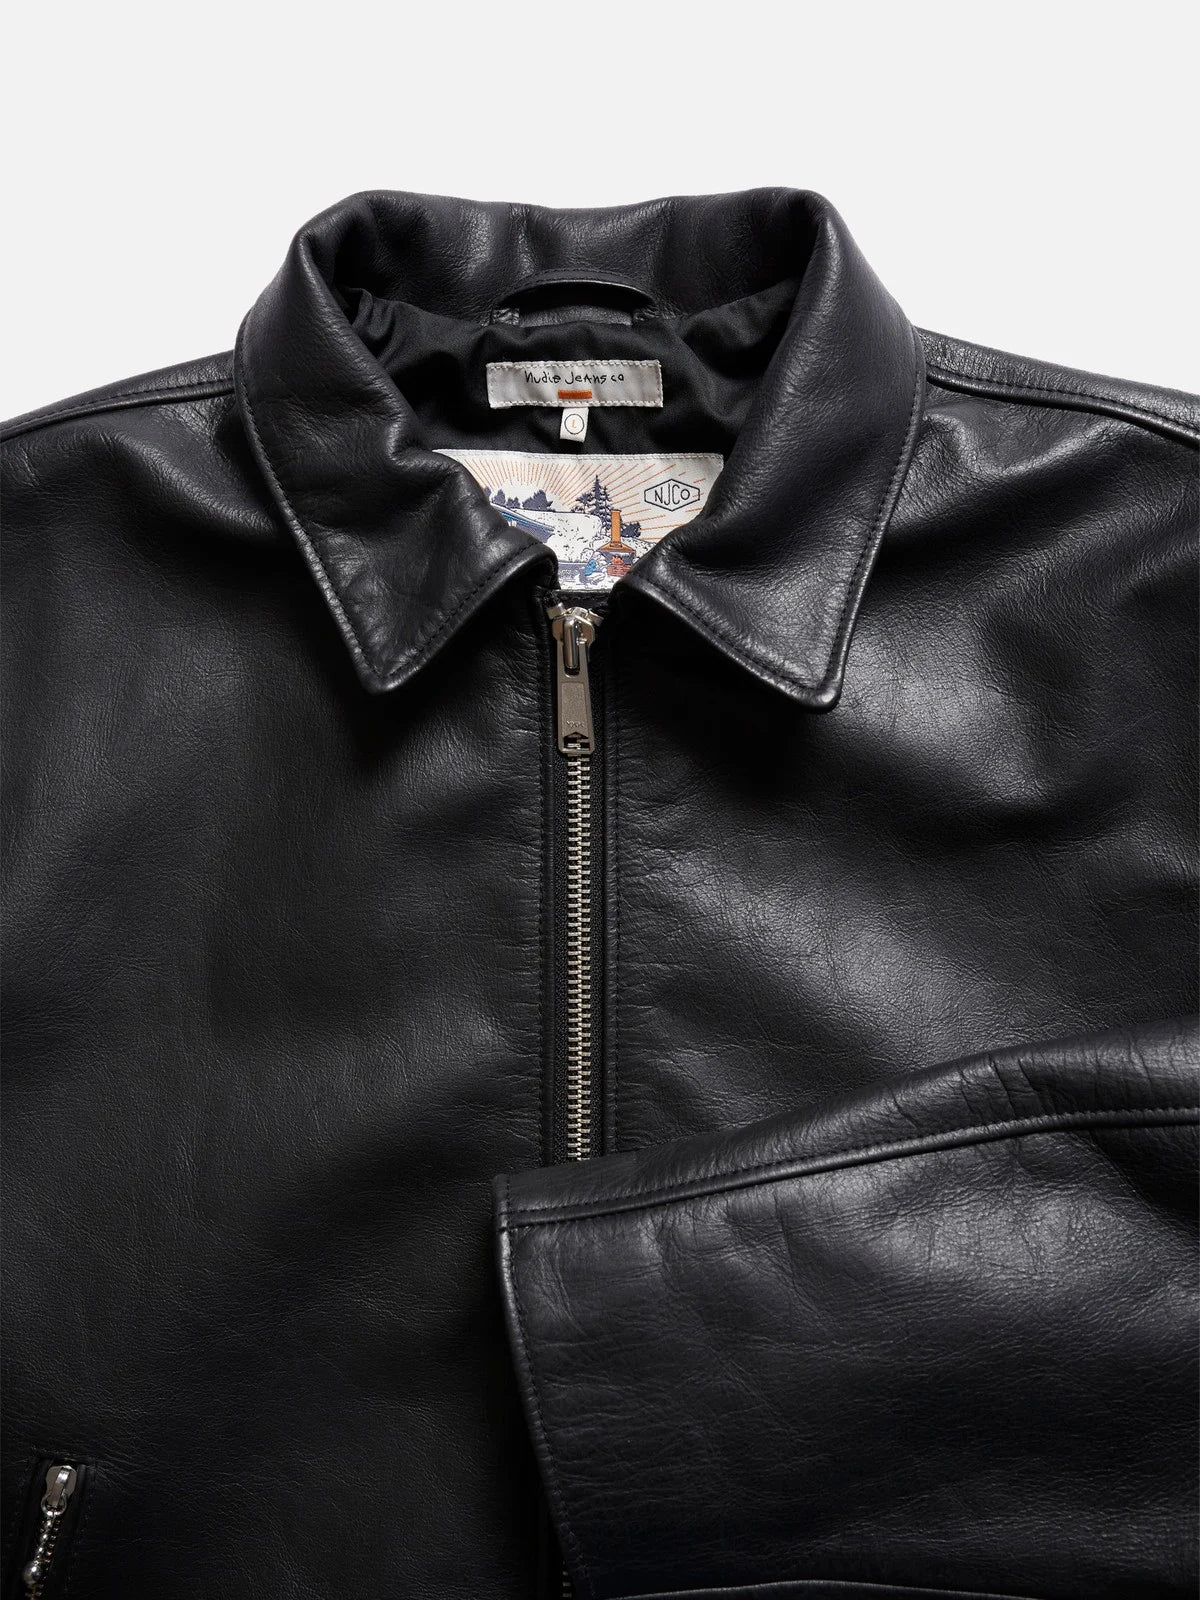 Eddy Rider Leather Jacket Black